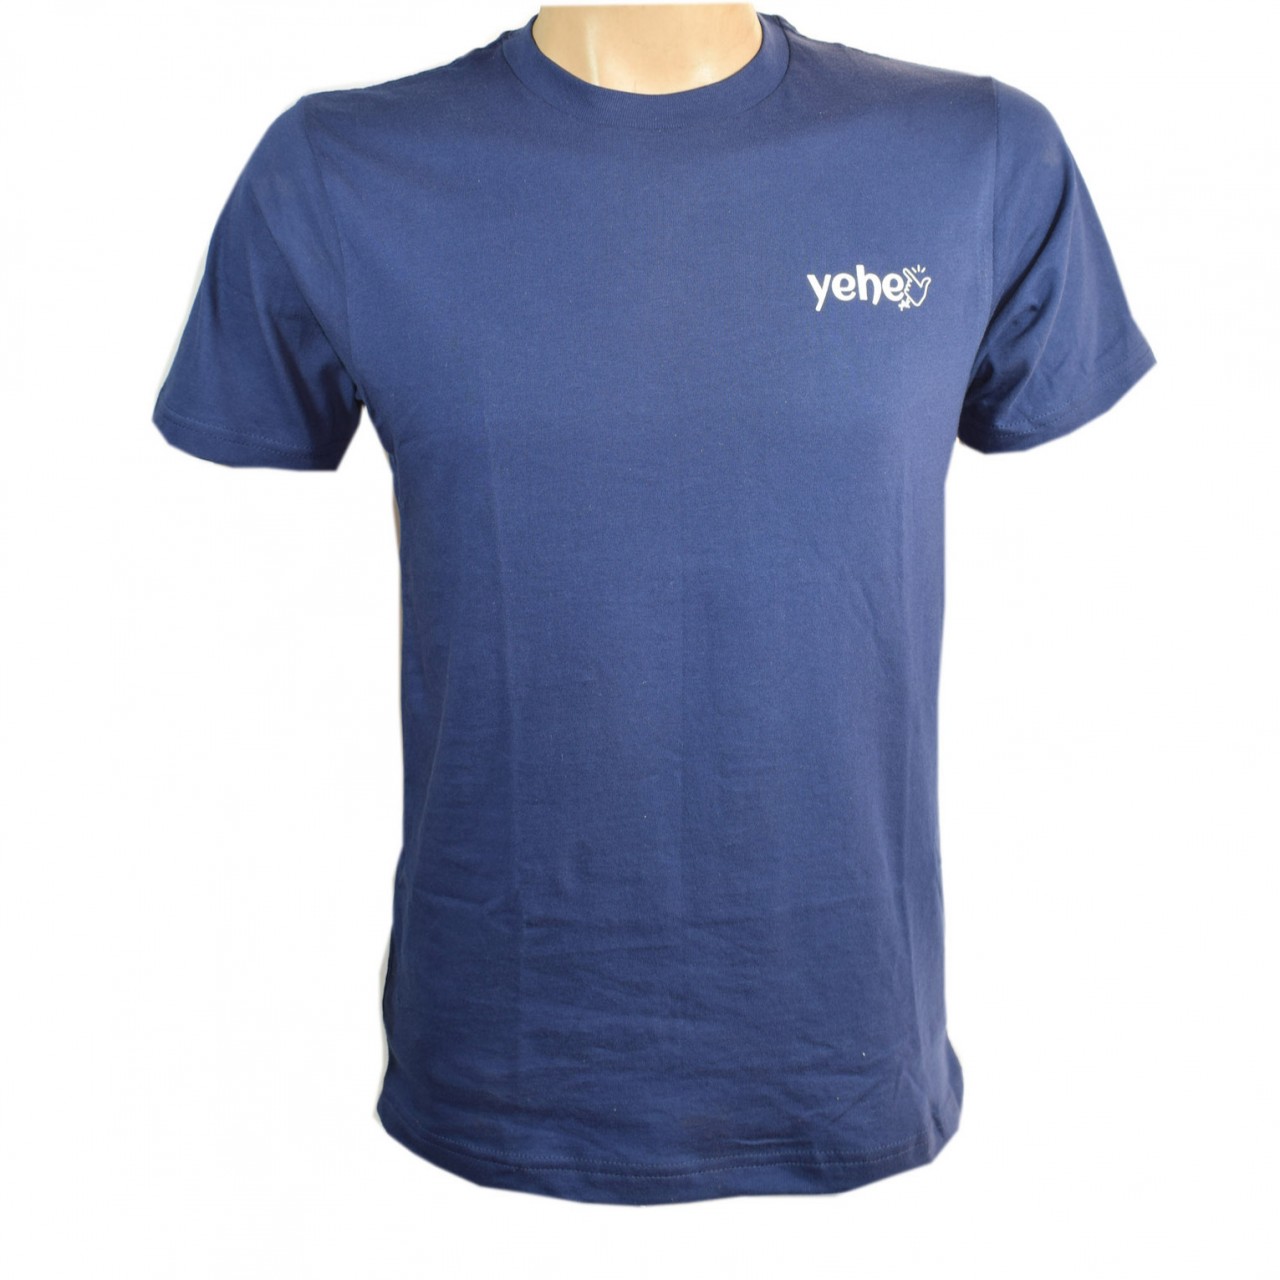 T-Shirt Navy Blue Summer Plain 100% Cotton for Men - Sale price - Buy ...